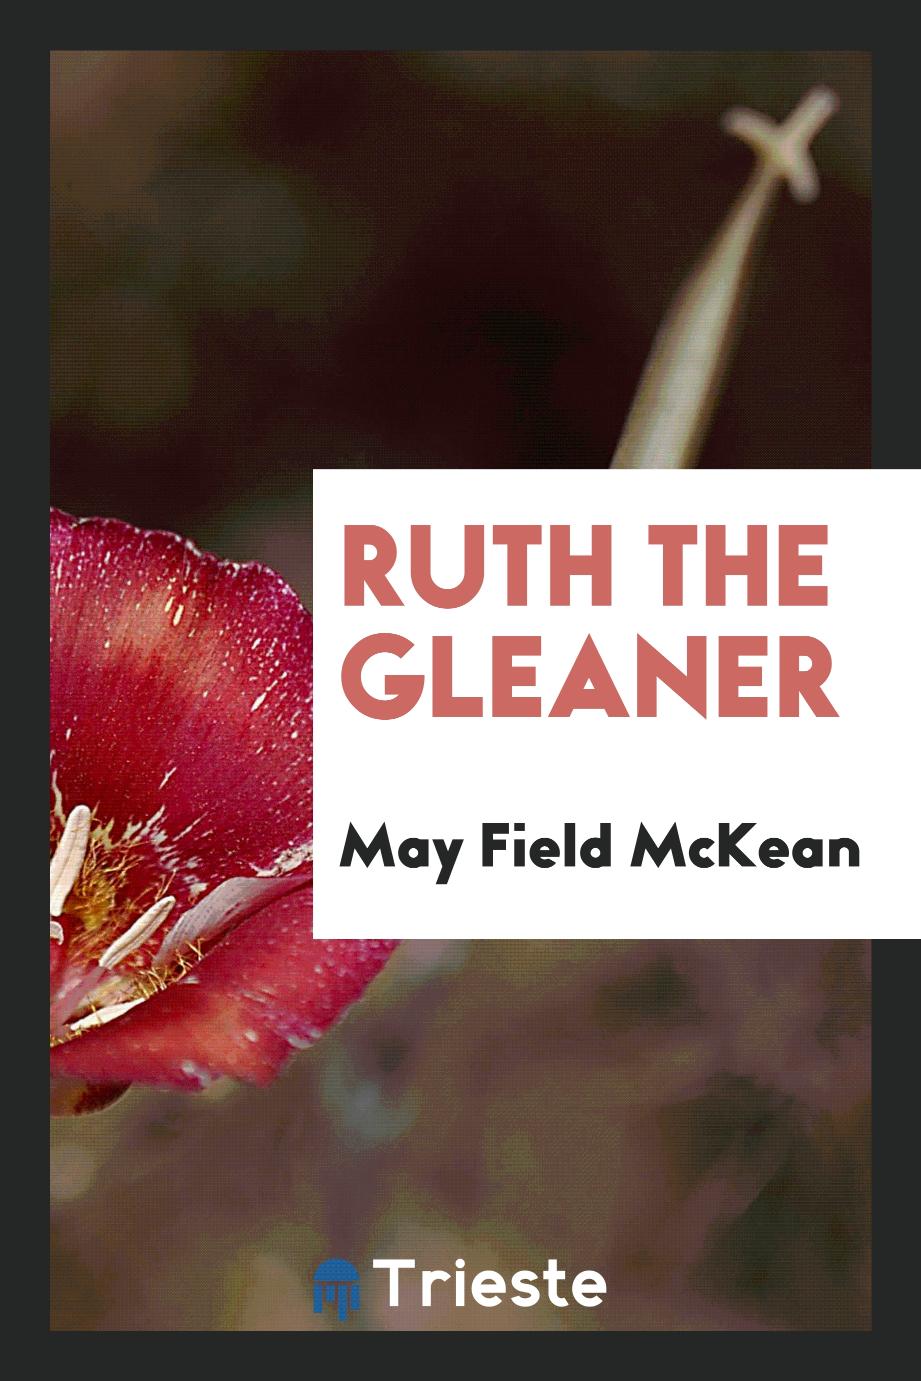 Ruth the gleaner